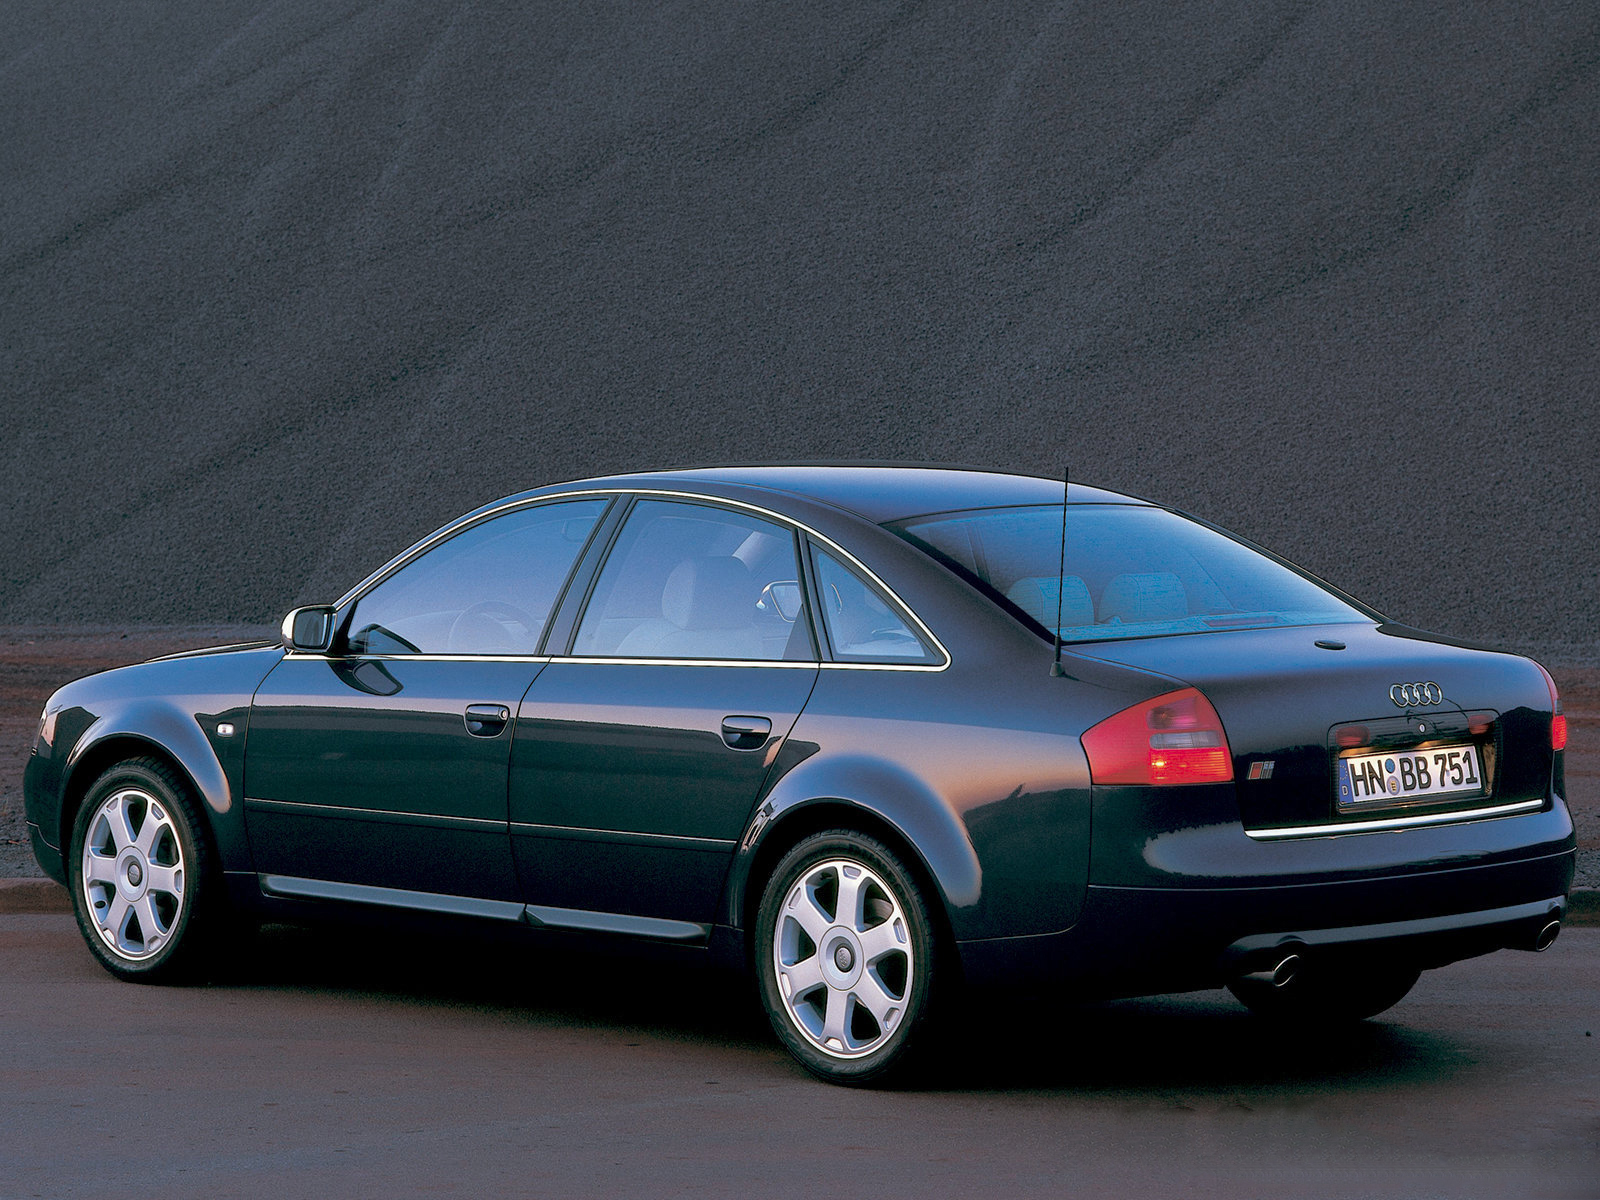 Ауди а6 с5 2001 год. Audi a6 c5 2000. Audi a6 c5 1999. Audi s6 c5 2000. Audi s6 c5.